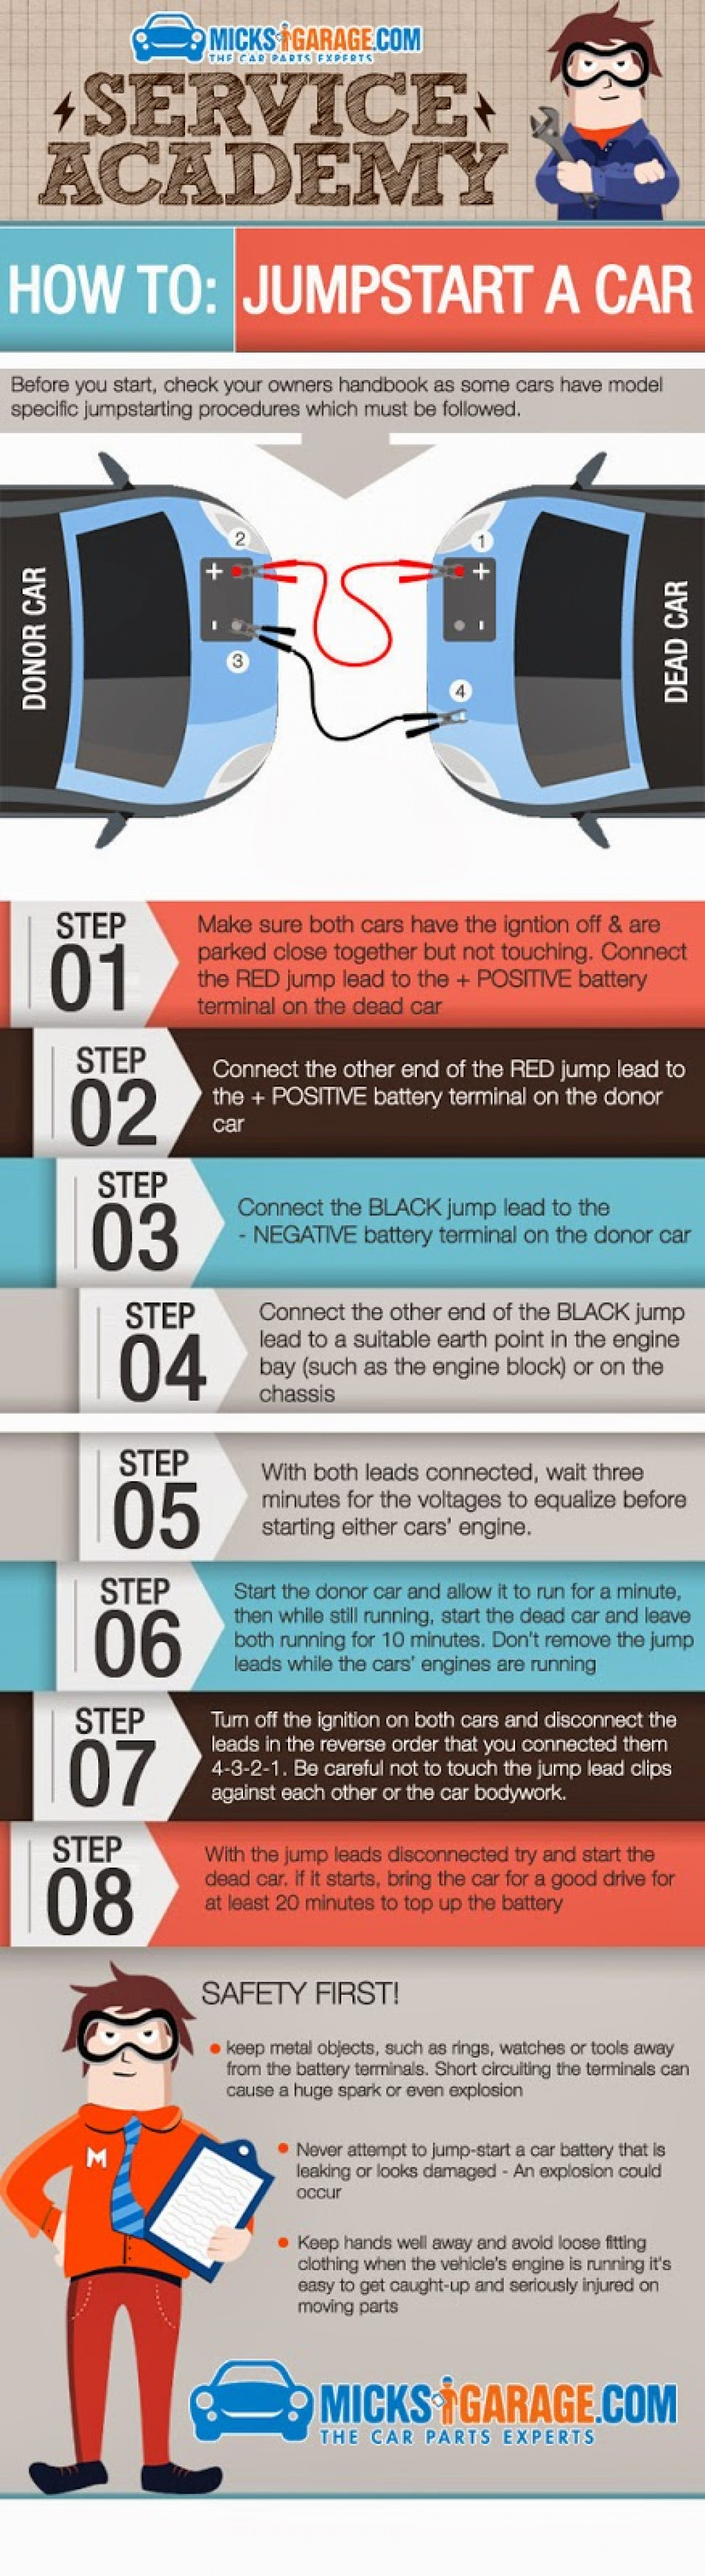 Ways To Jump Start Car